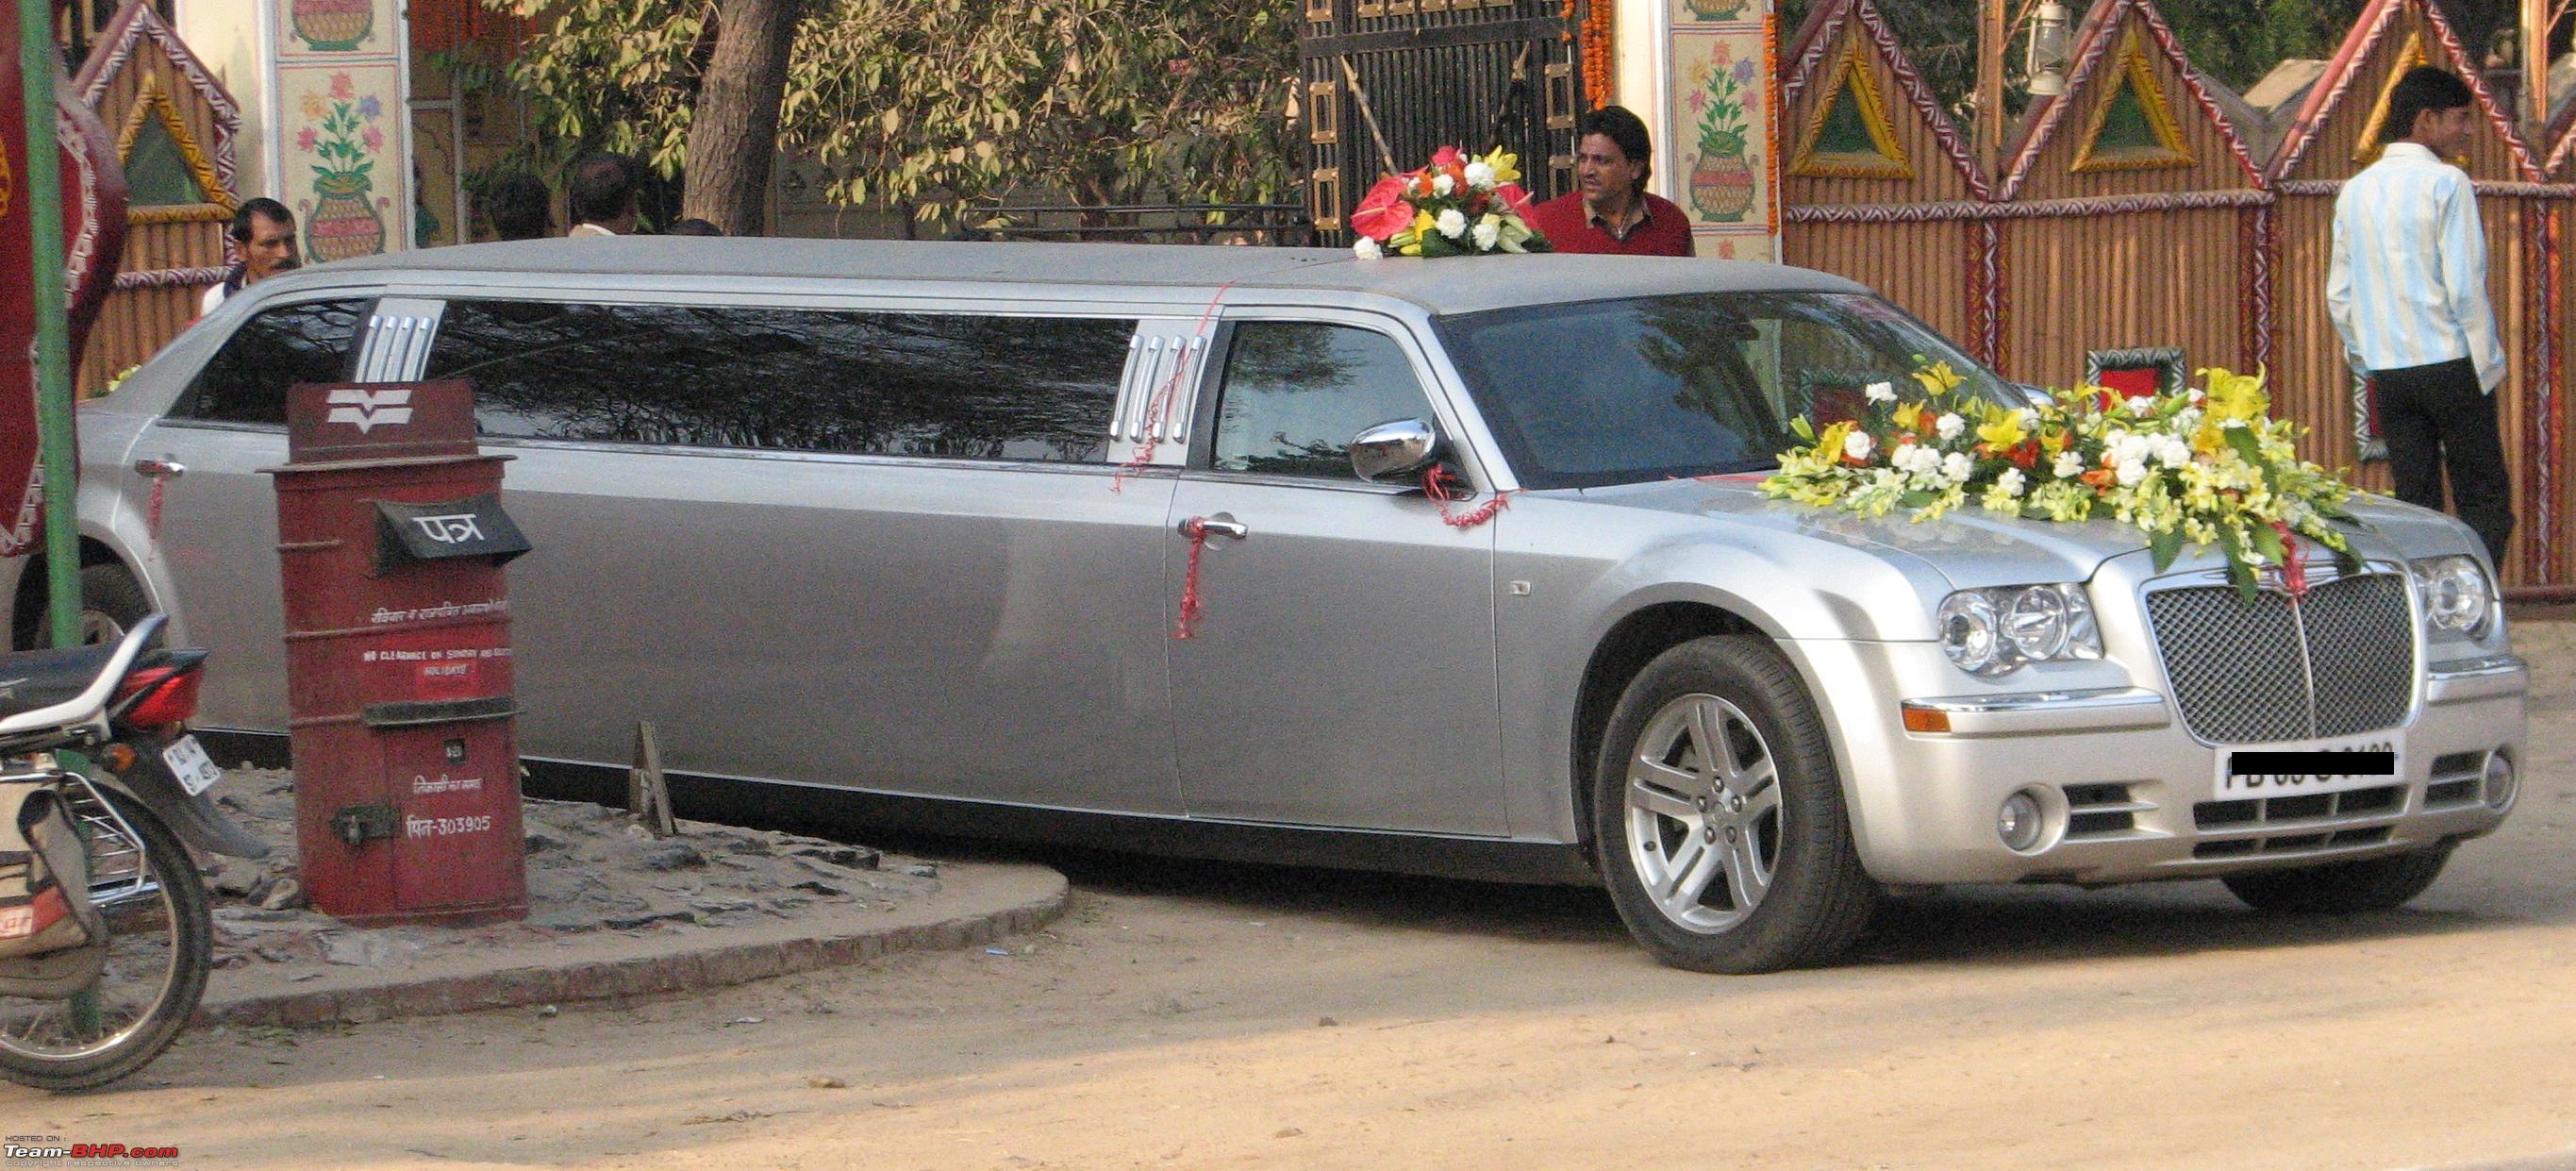 Chrysler 300 limousine price in india #2